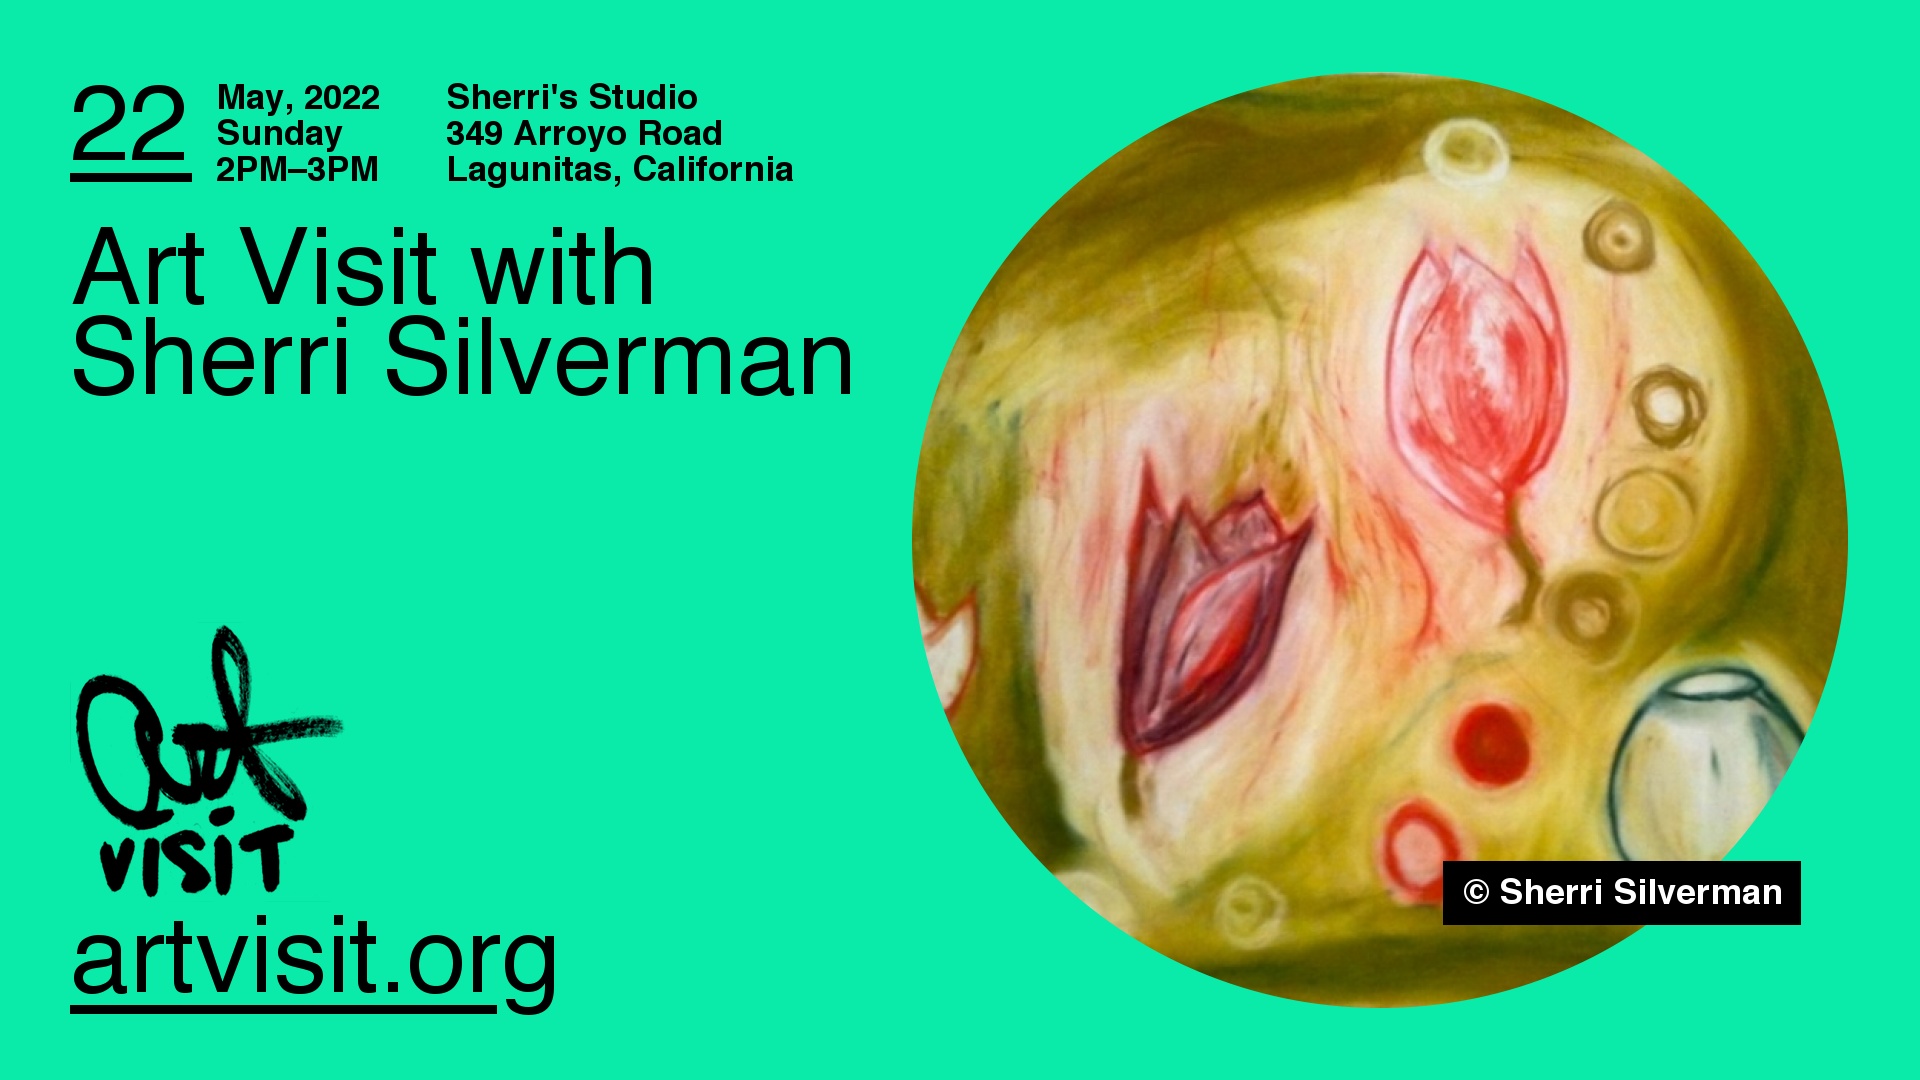 Art Visit with Sherri Silverman